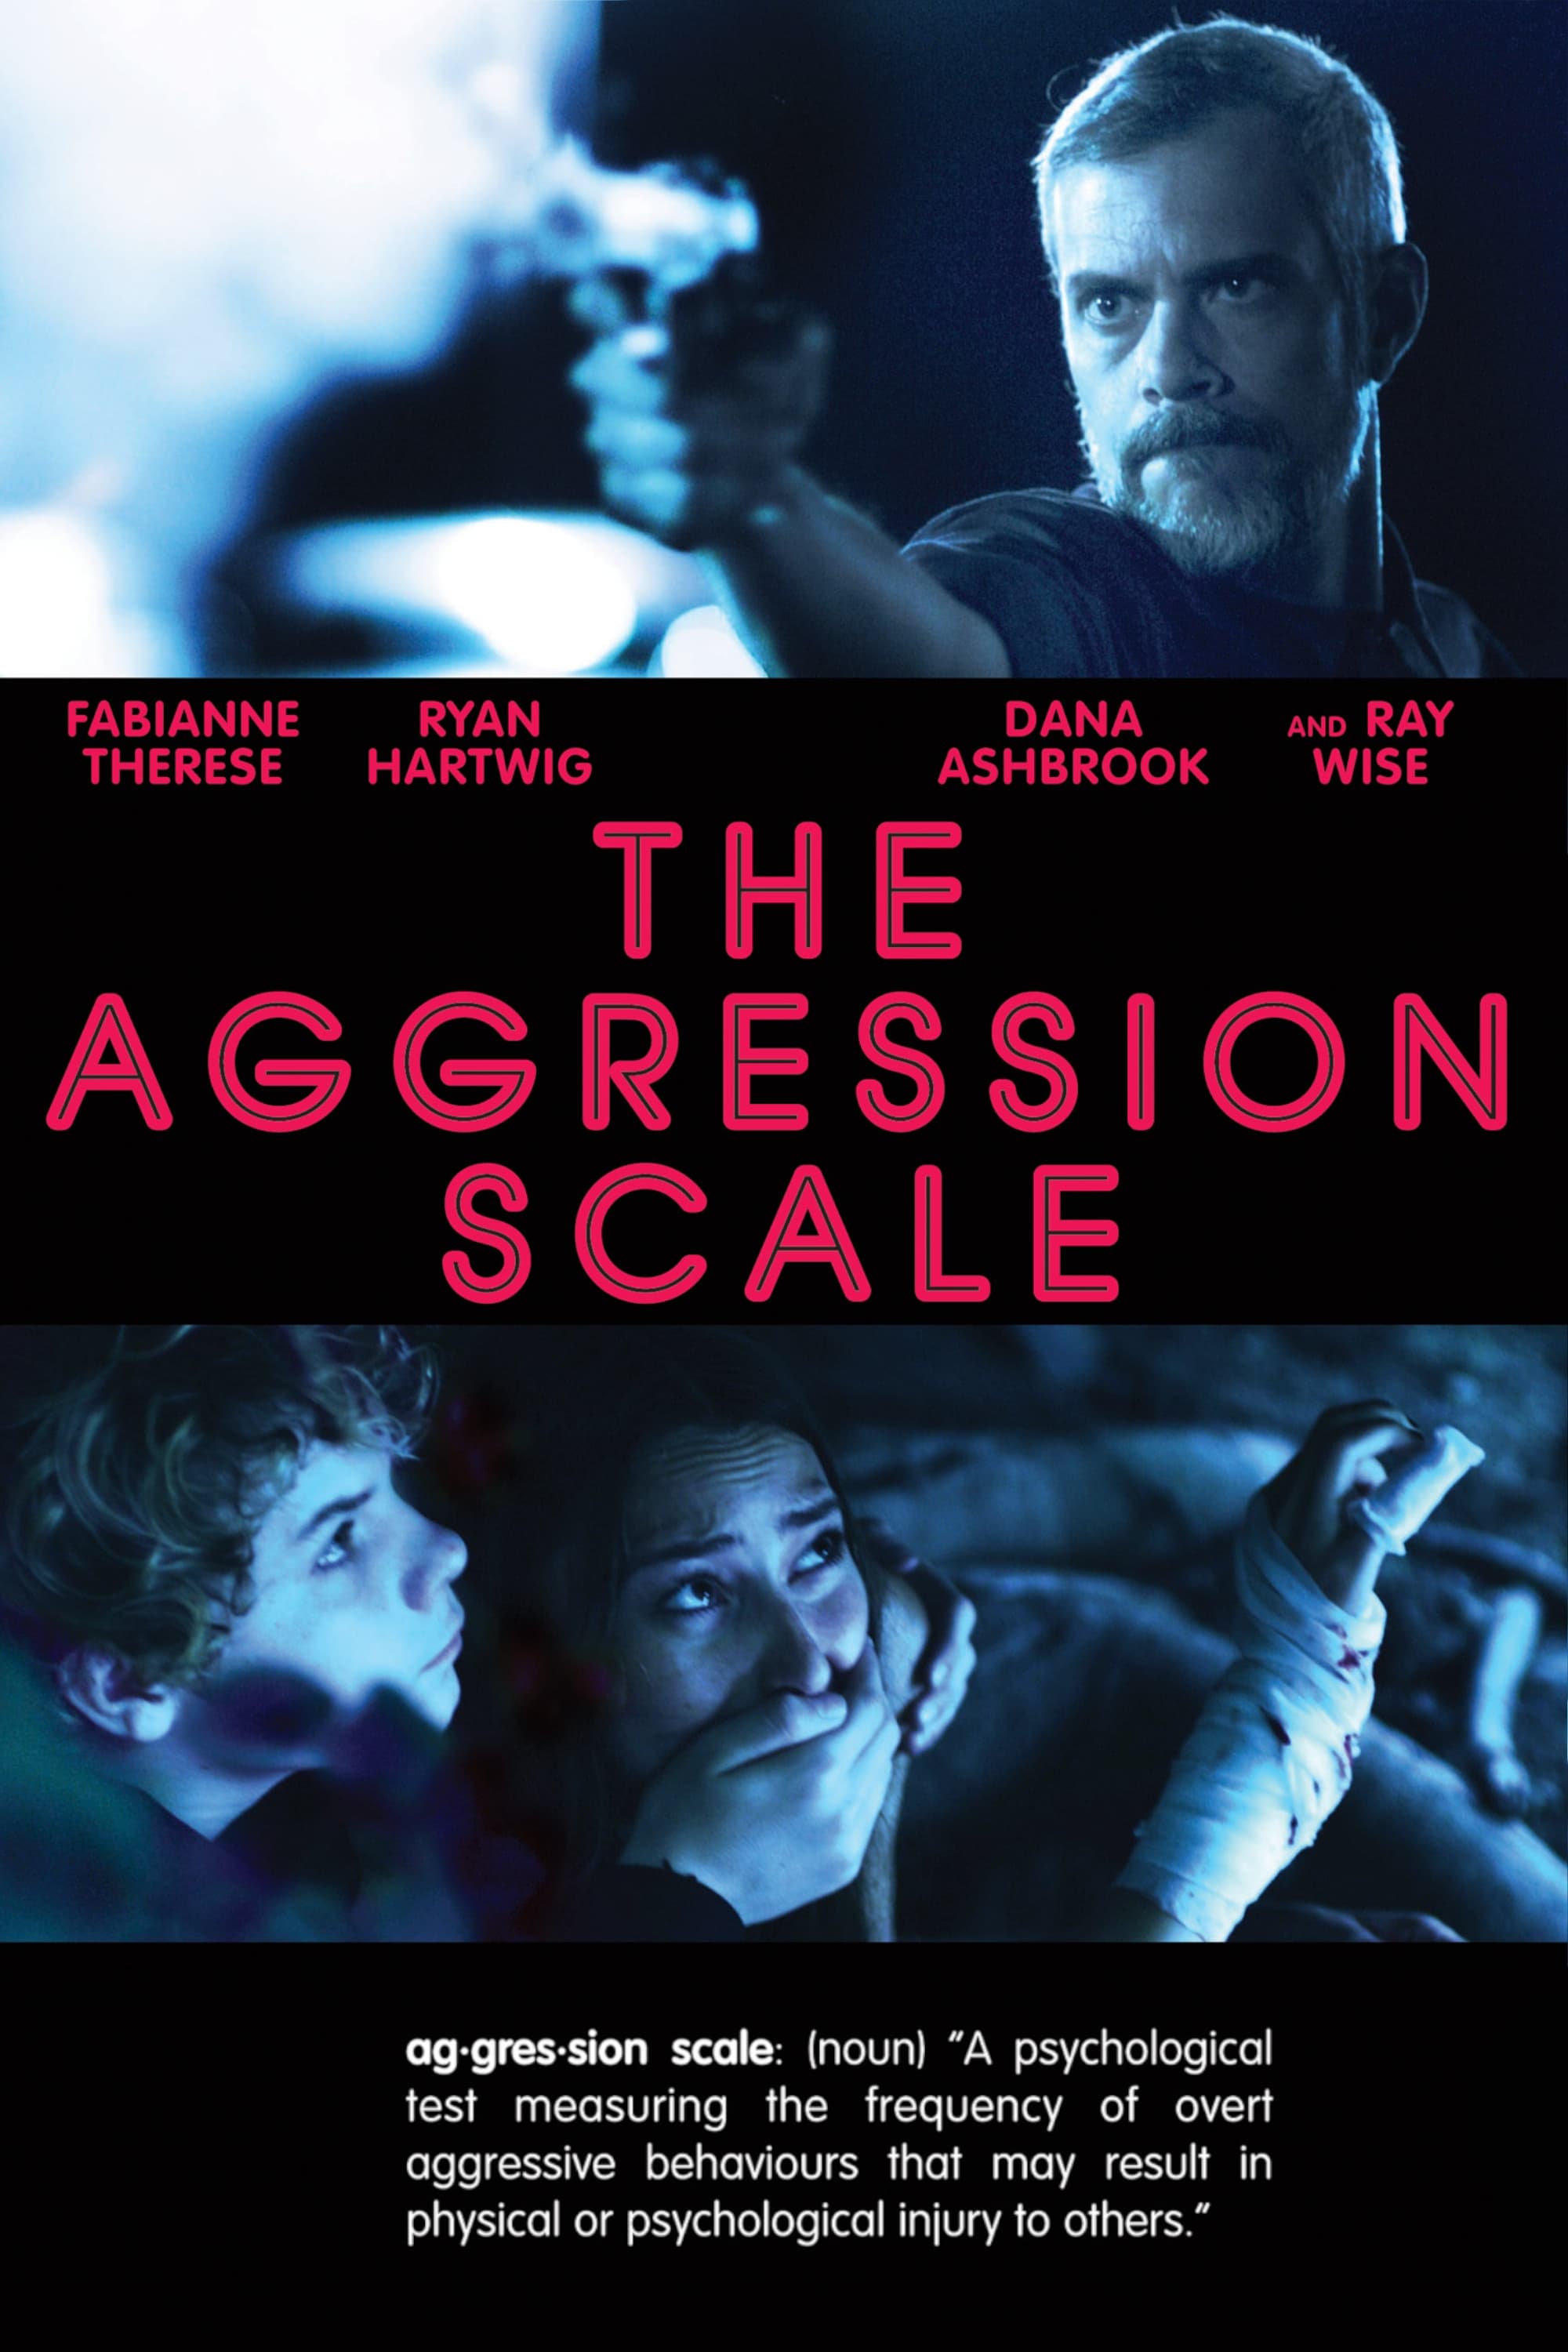 The Aggression Scale (2012)